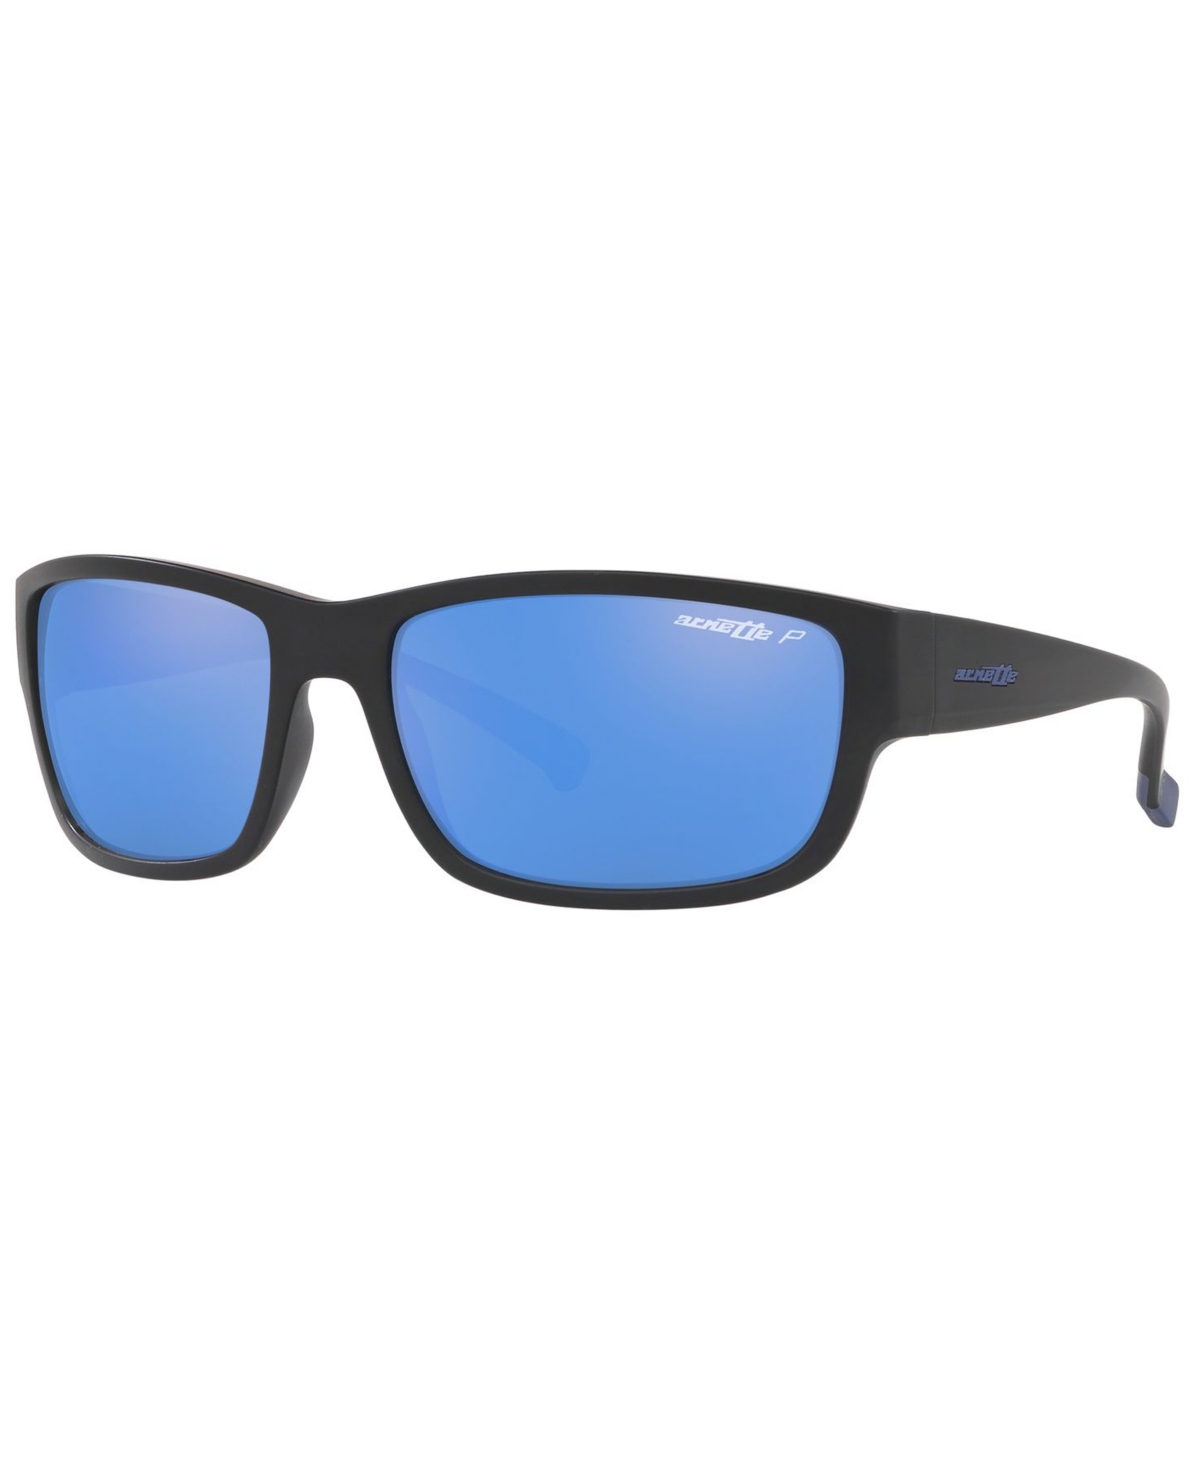 Polarized Sunglasses , AN4256 62 - MATTE BLACK/DARK GREY MIRROR WATER